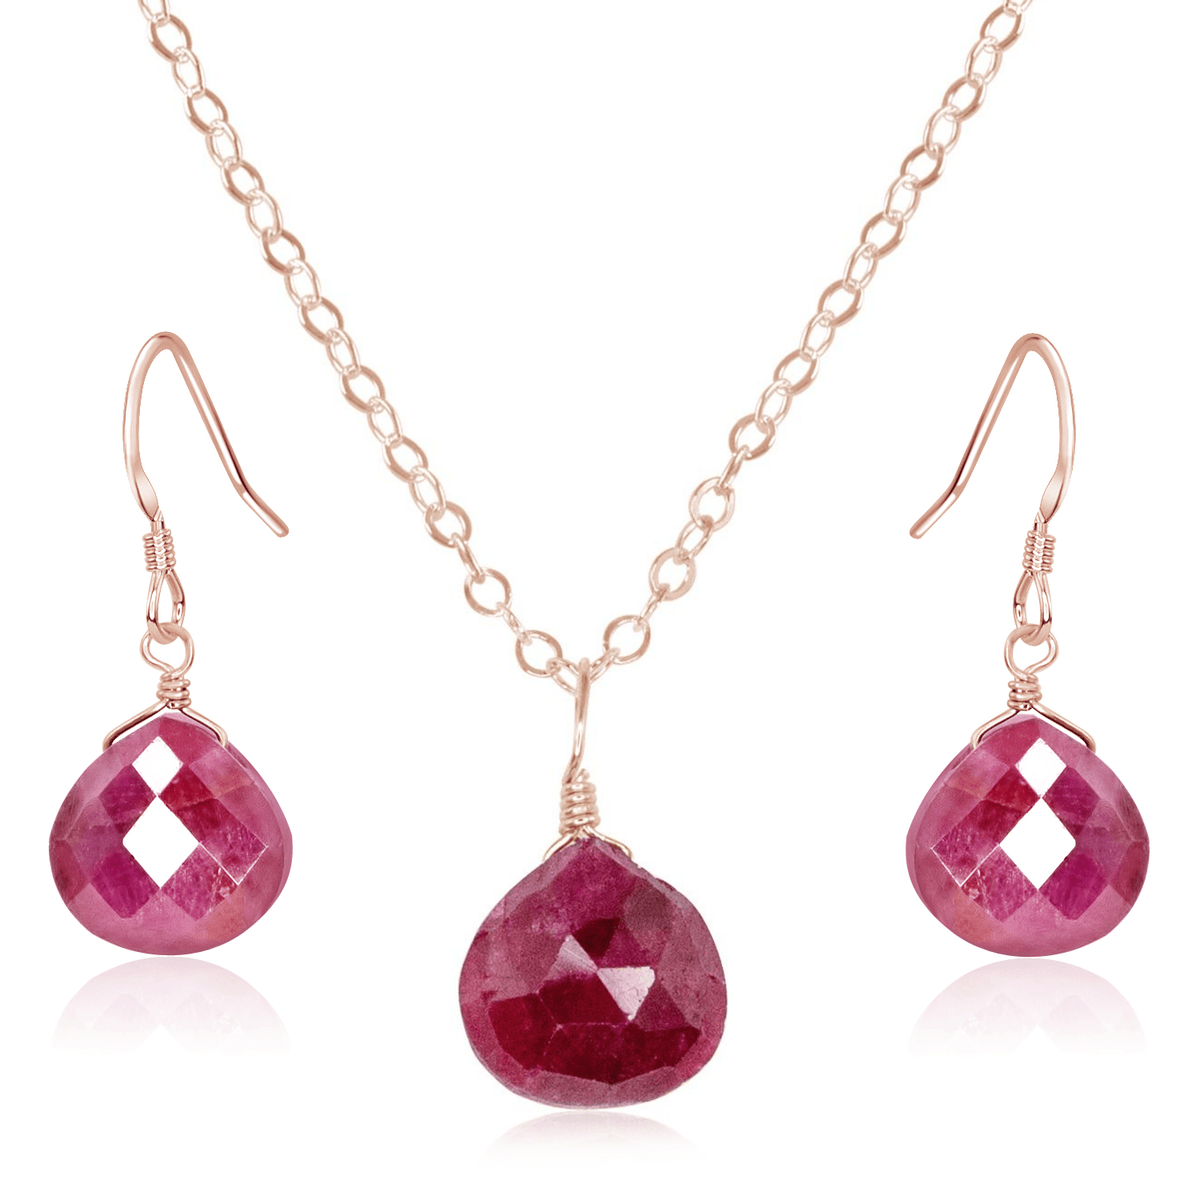 Ruby Tiny Teardrop Earrings & Necklace Set - Ruby Tiny Teardrop Earrings & Necklace Set - 14k Rose Gold Fill / Cable - Luna Tide Handmade Crystal Jewellery